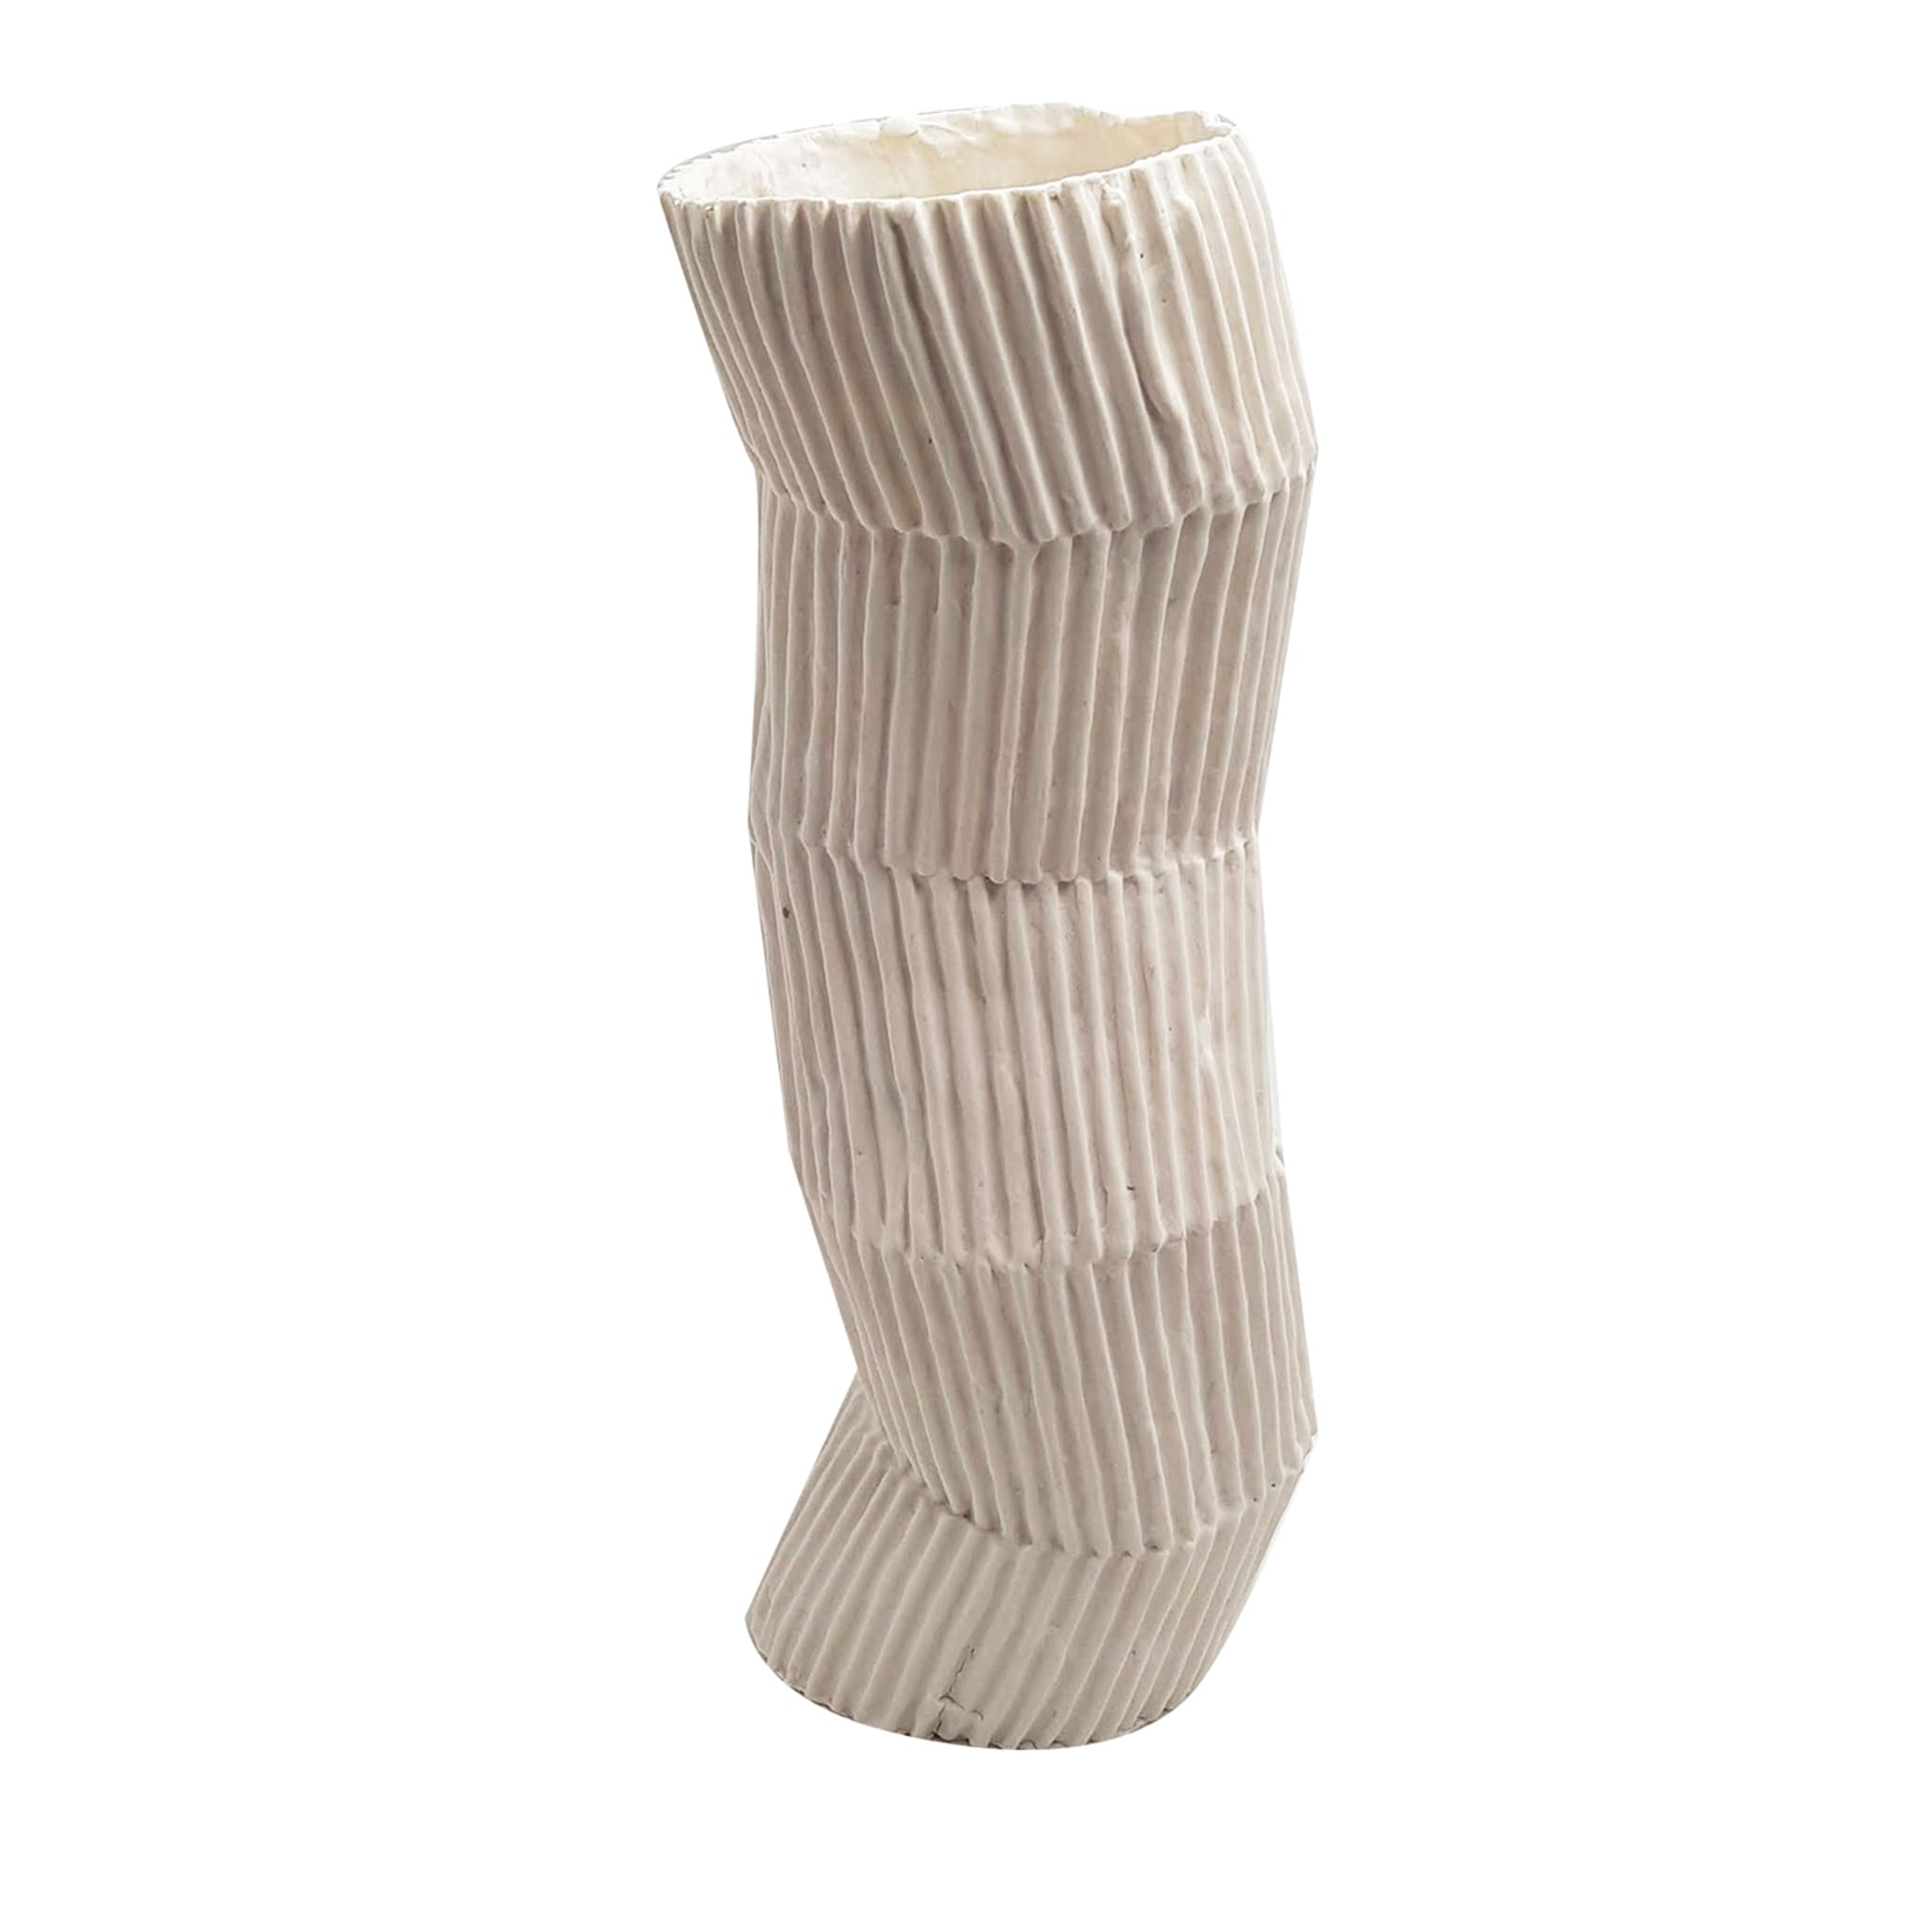 Vase en Paperclay blanc Le Torrette par Nino Basso #1 - Vue principale